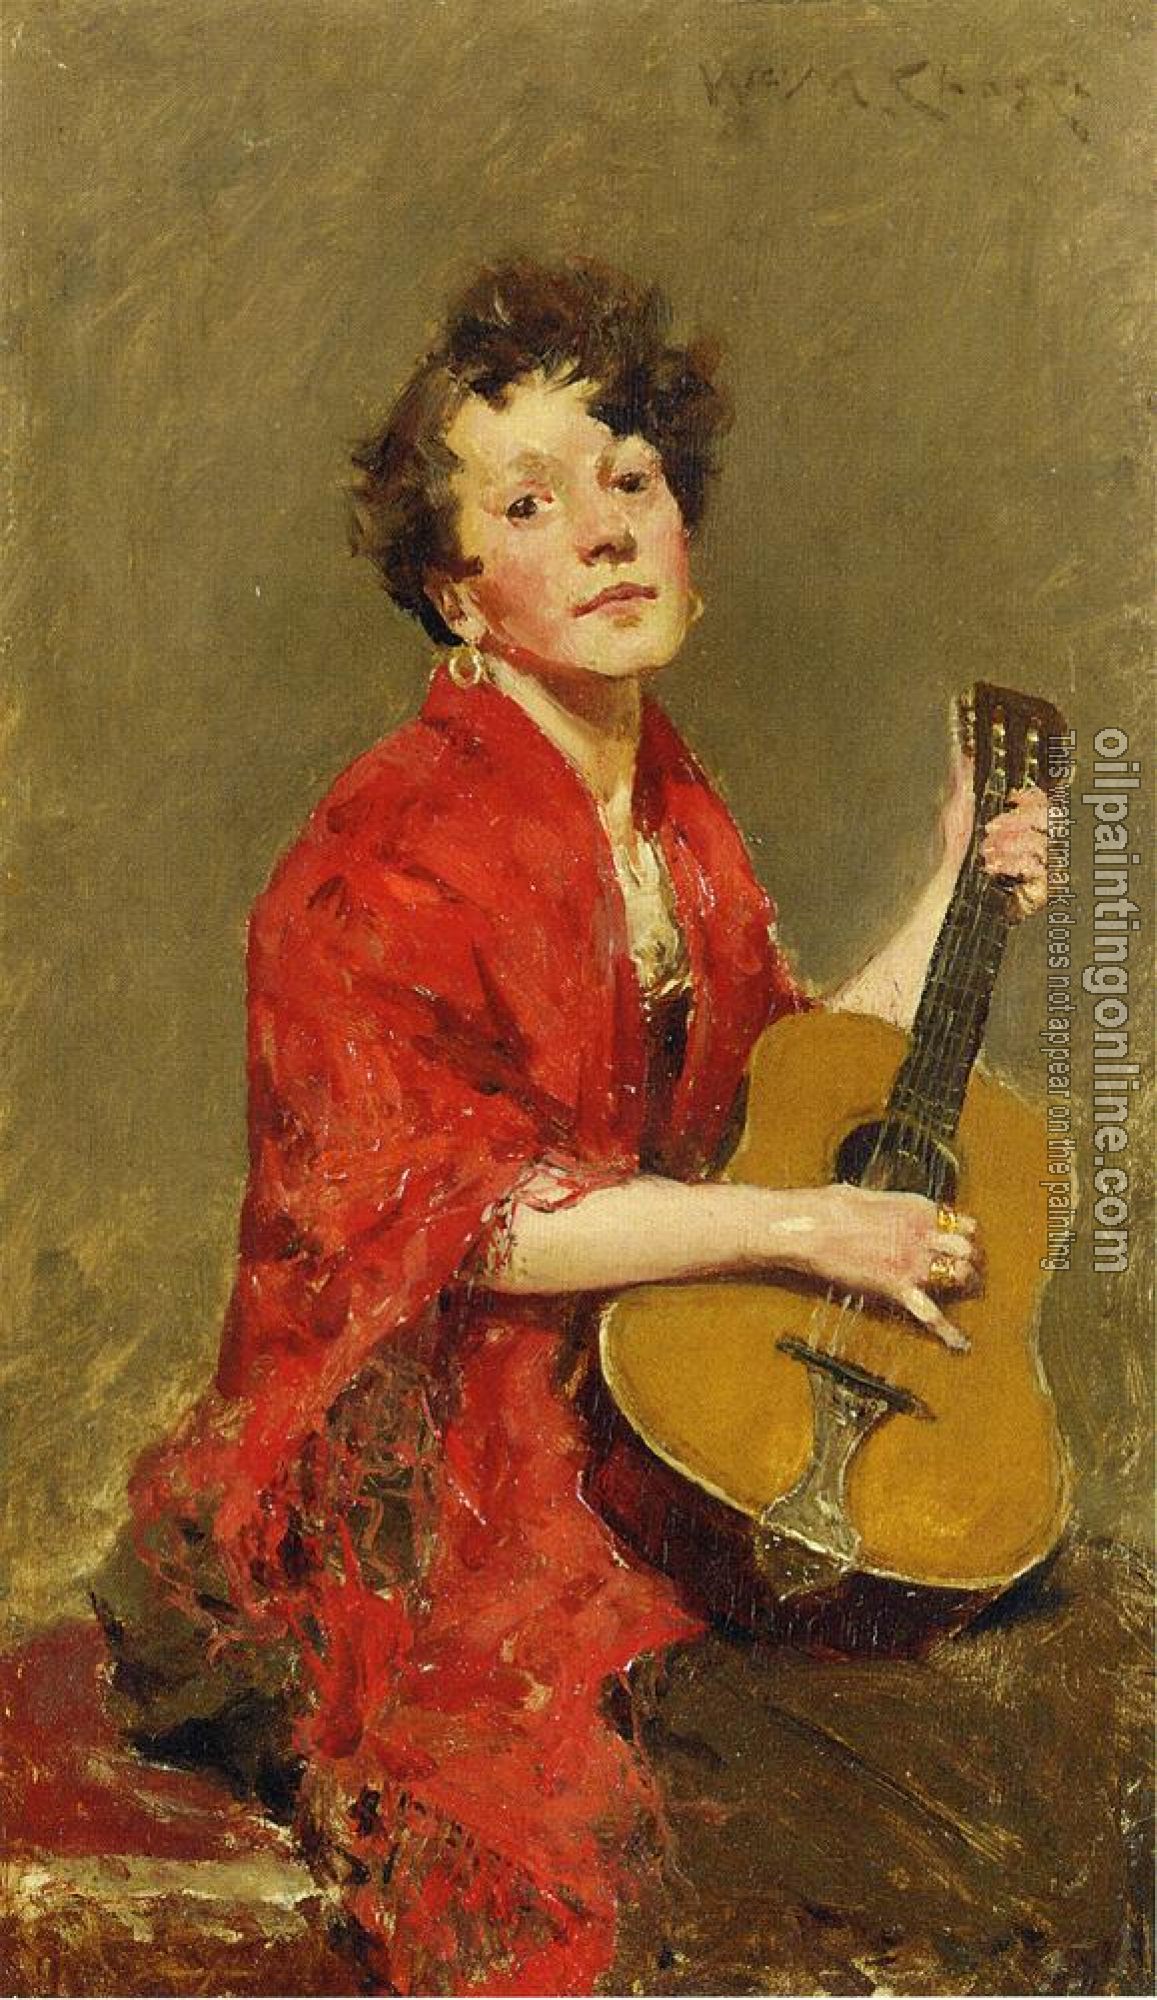 Chase, William Merritt - Girl with Guitar